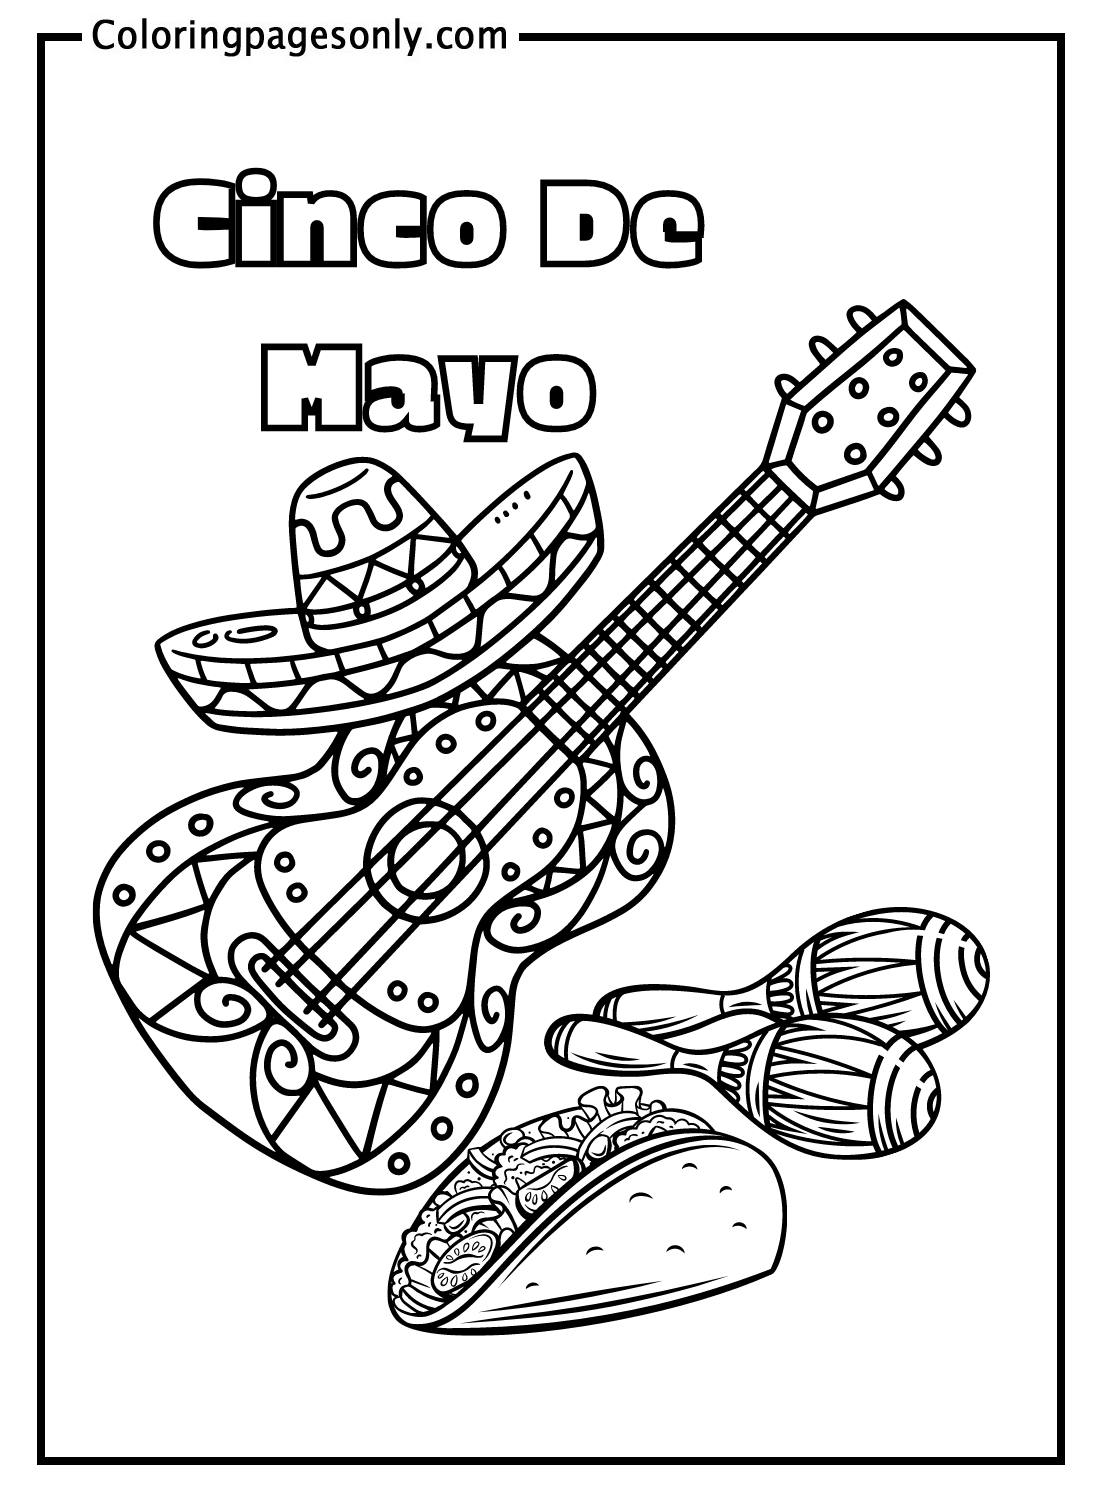 Cinco De Mayo Guitar And Maracas Coloring Pages